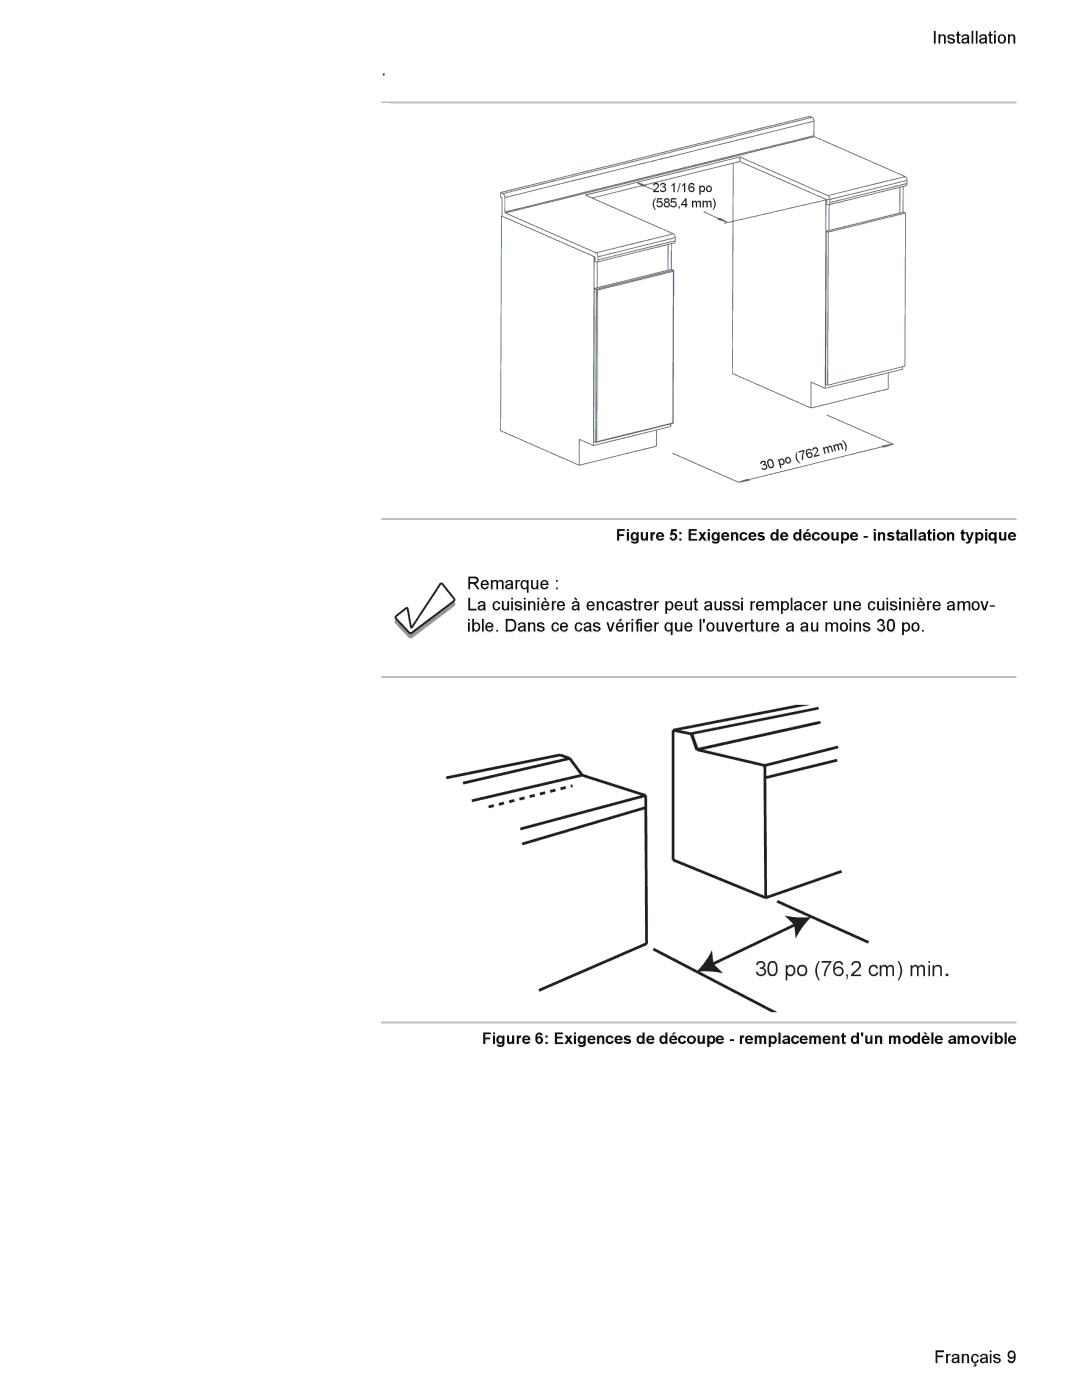 Bosch Appliances Dual-Fuel Slide-In Range installation instructions 30 po 76,2 cm min 